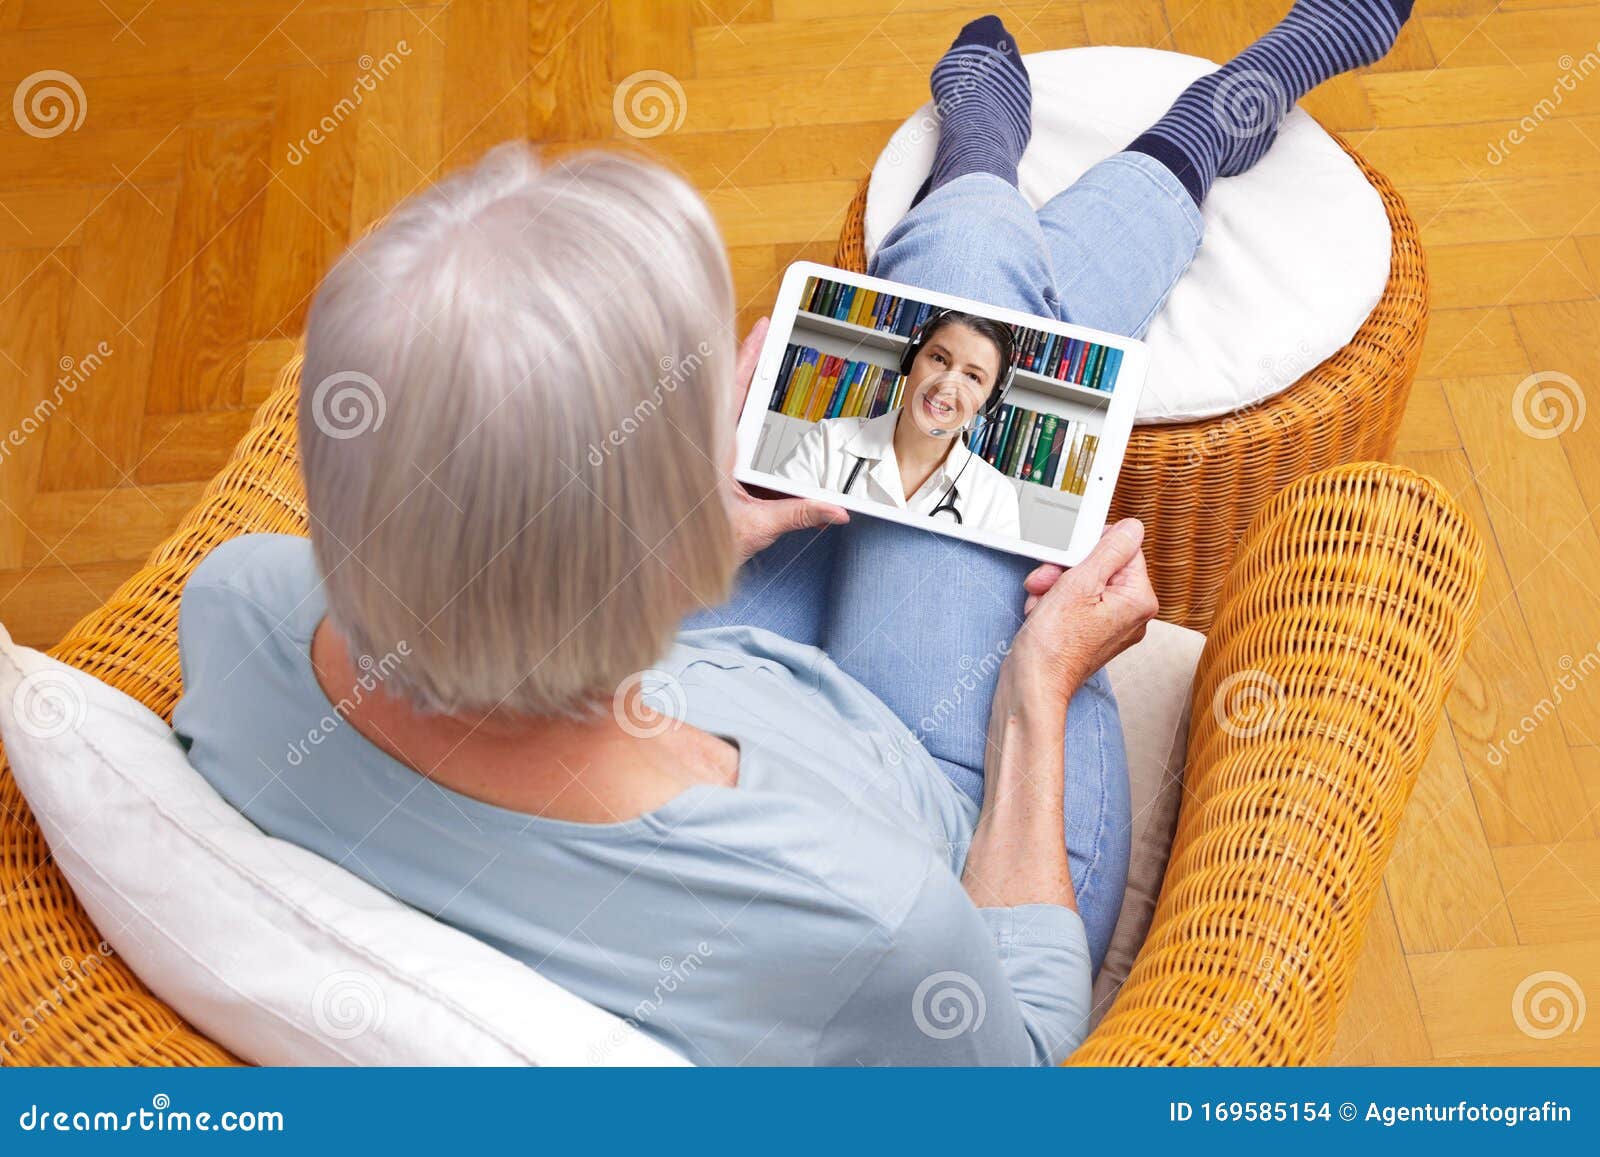 telemedicine senior woman online consultation